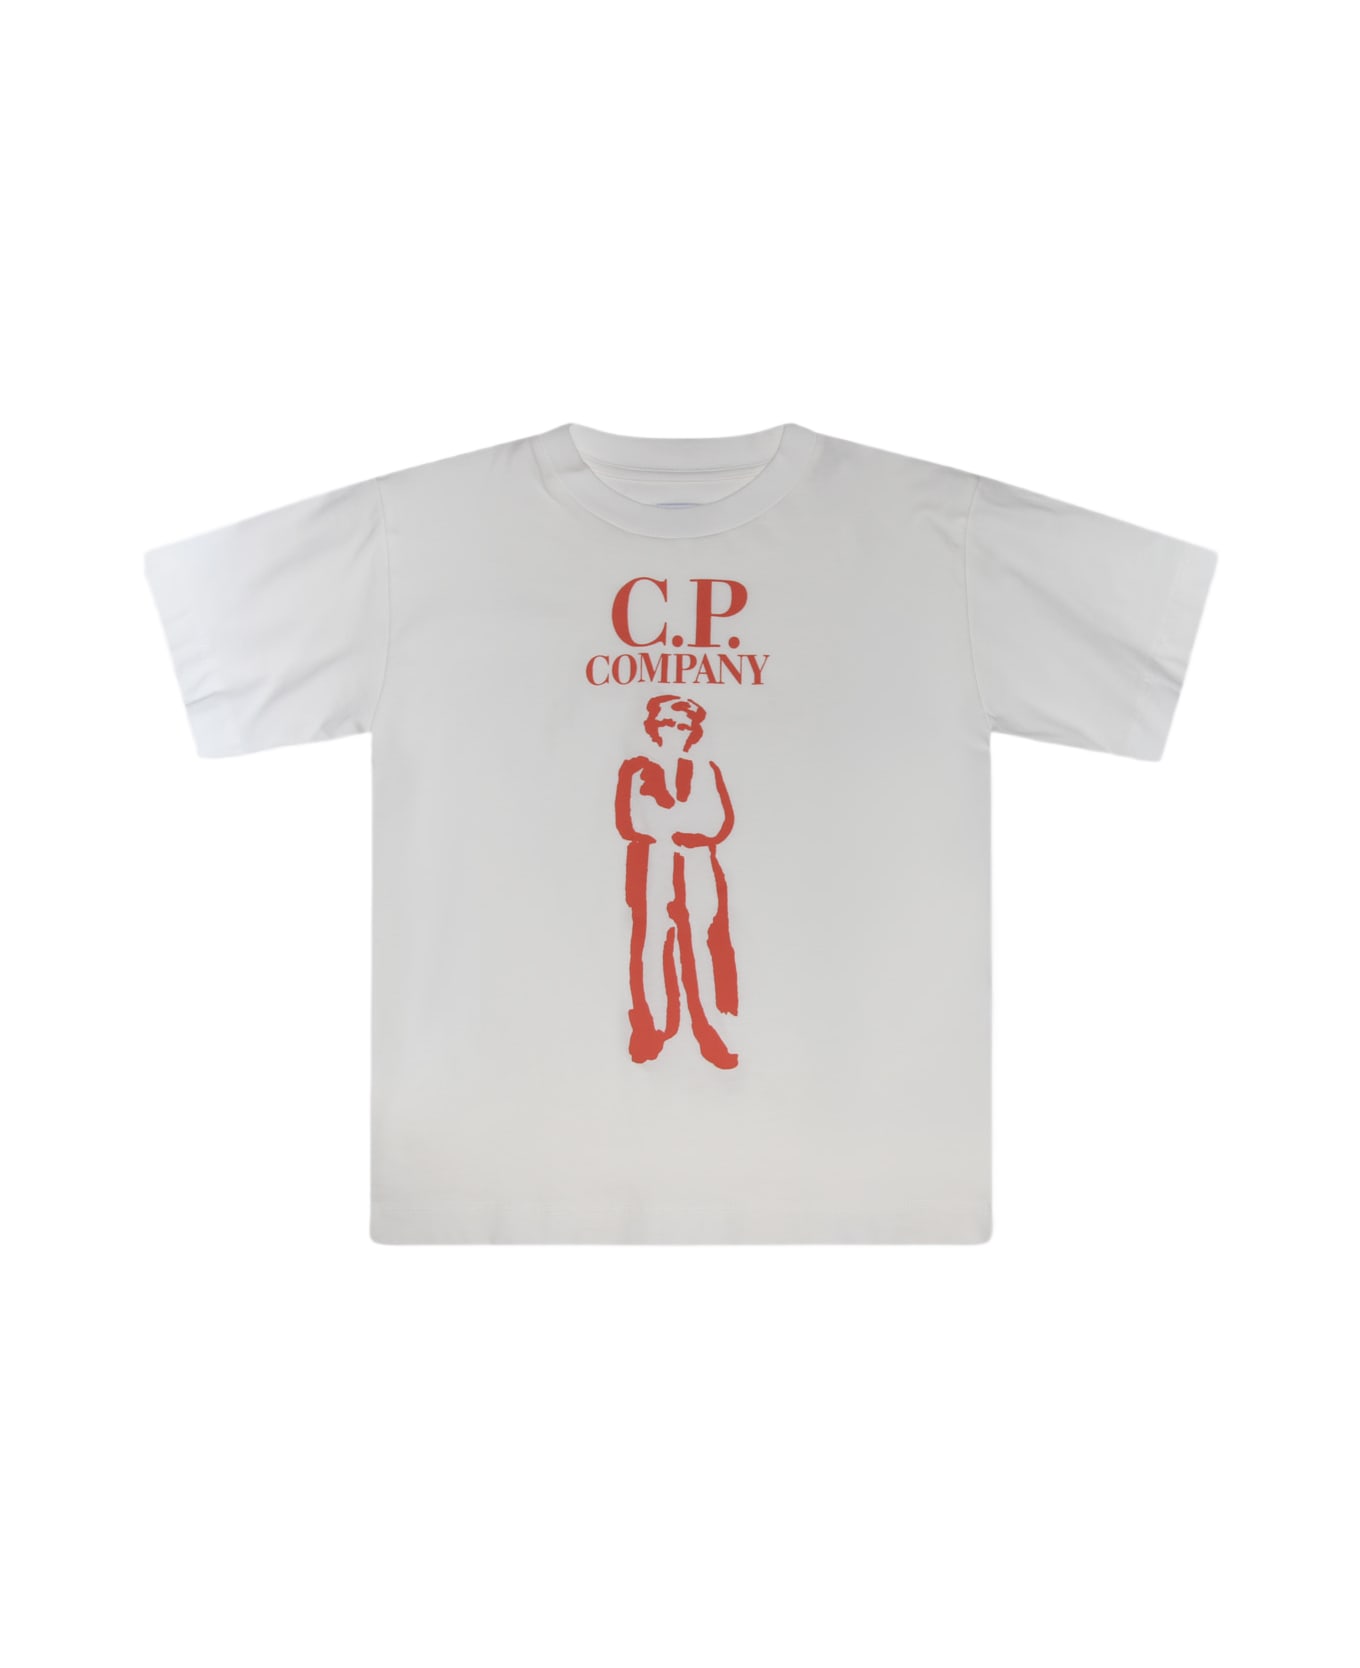 C.P. Company White And Orange Cotton T-shirt - GAUZE WHITE